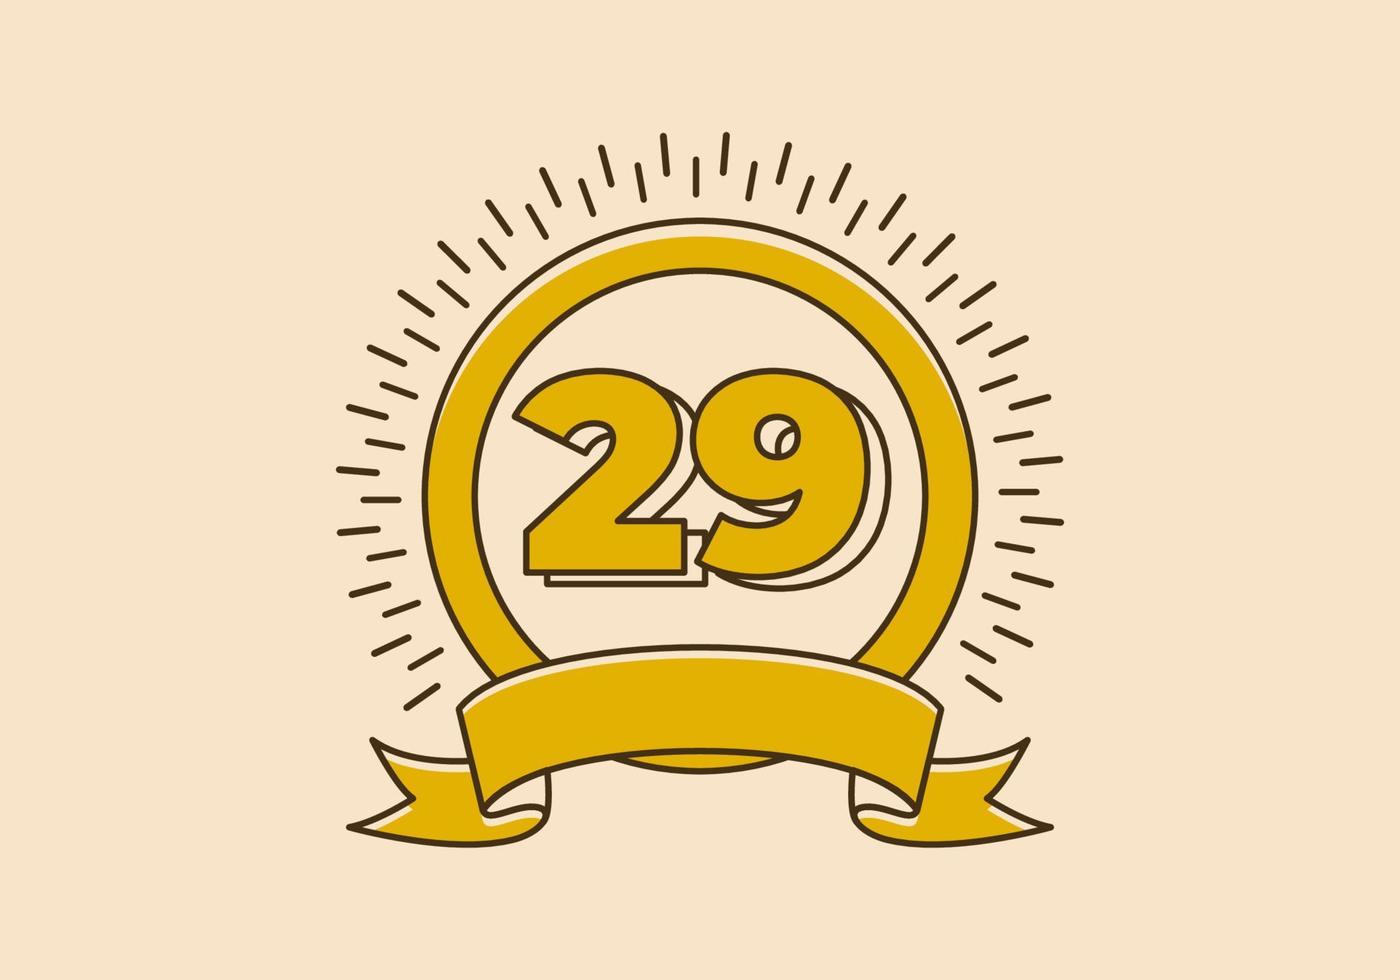 distintivo de círculo amarelo vintage com o número 29 nele vetor